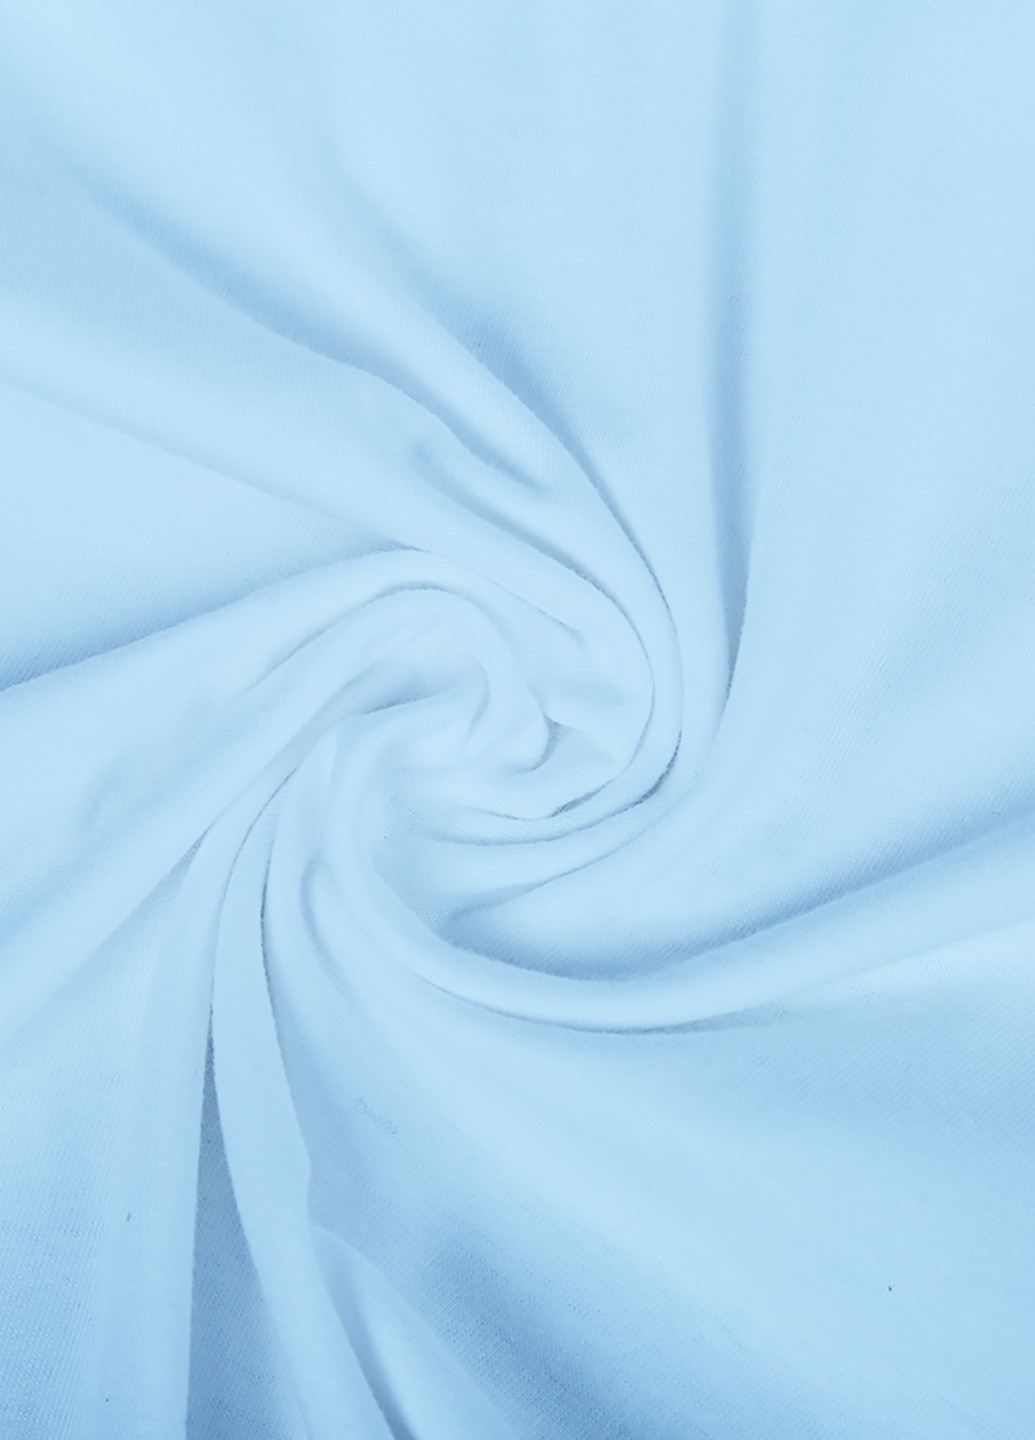 Голубая демисезонная футболка детская лайк единорог (likee unicorn)(9224-1037) MobiPrint